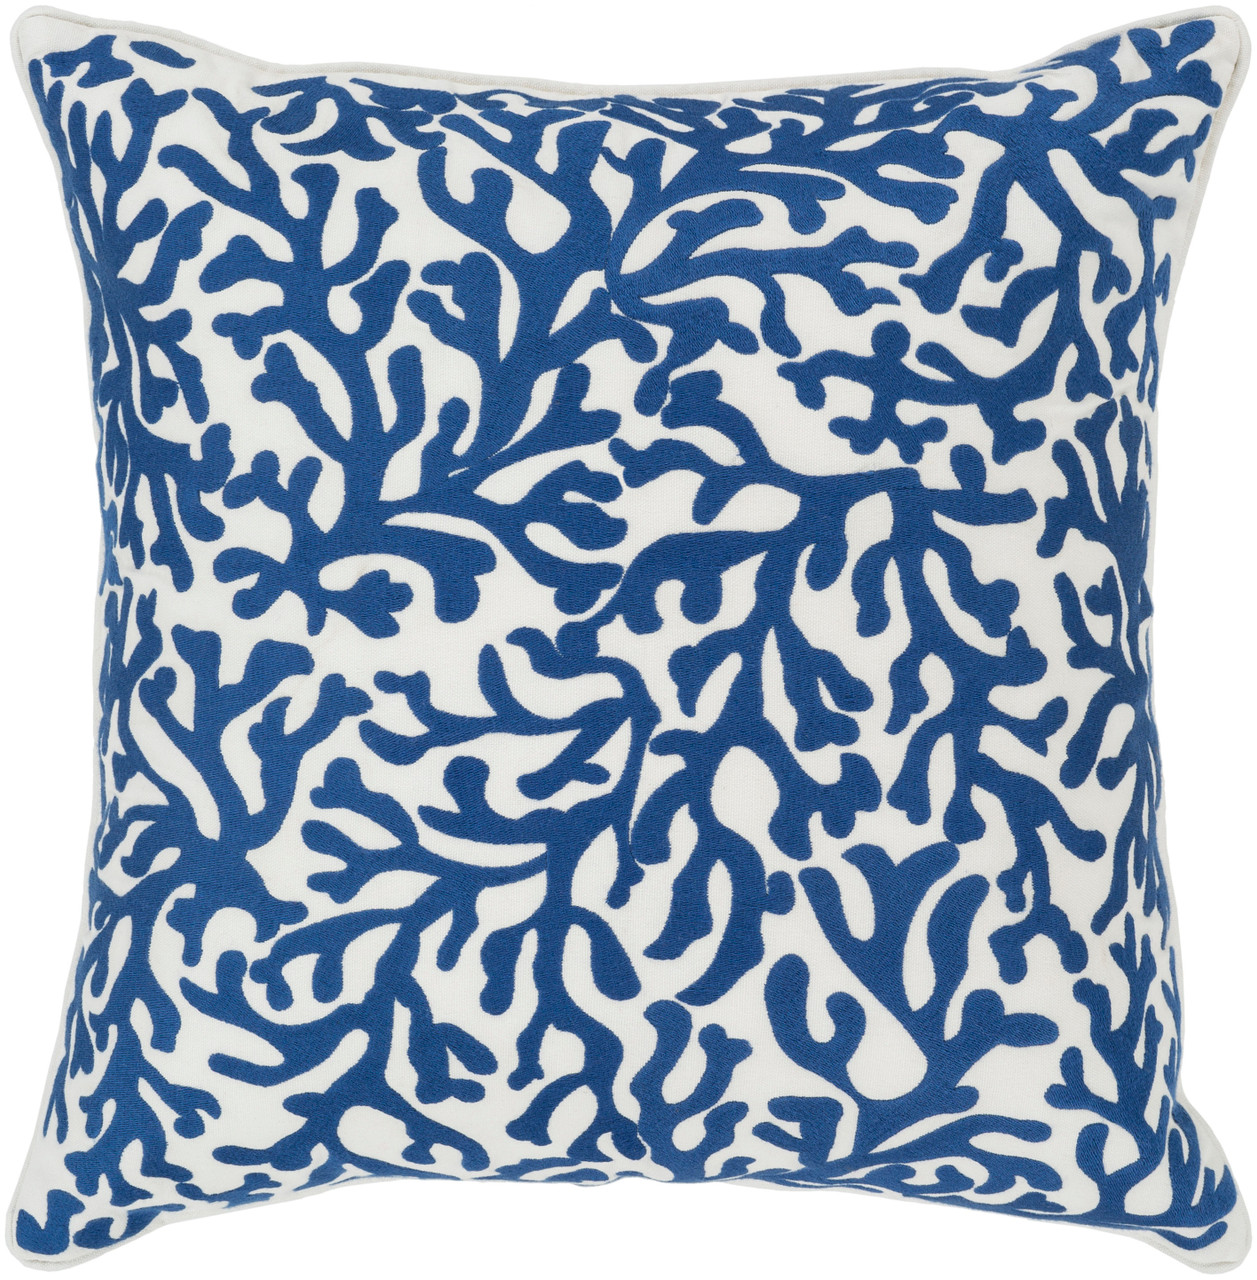 Ocean Theme Square Pillow Case Mediterranean Style Decorative